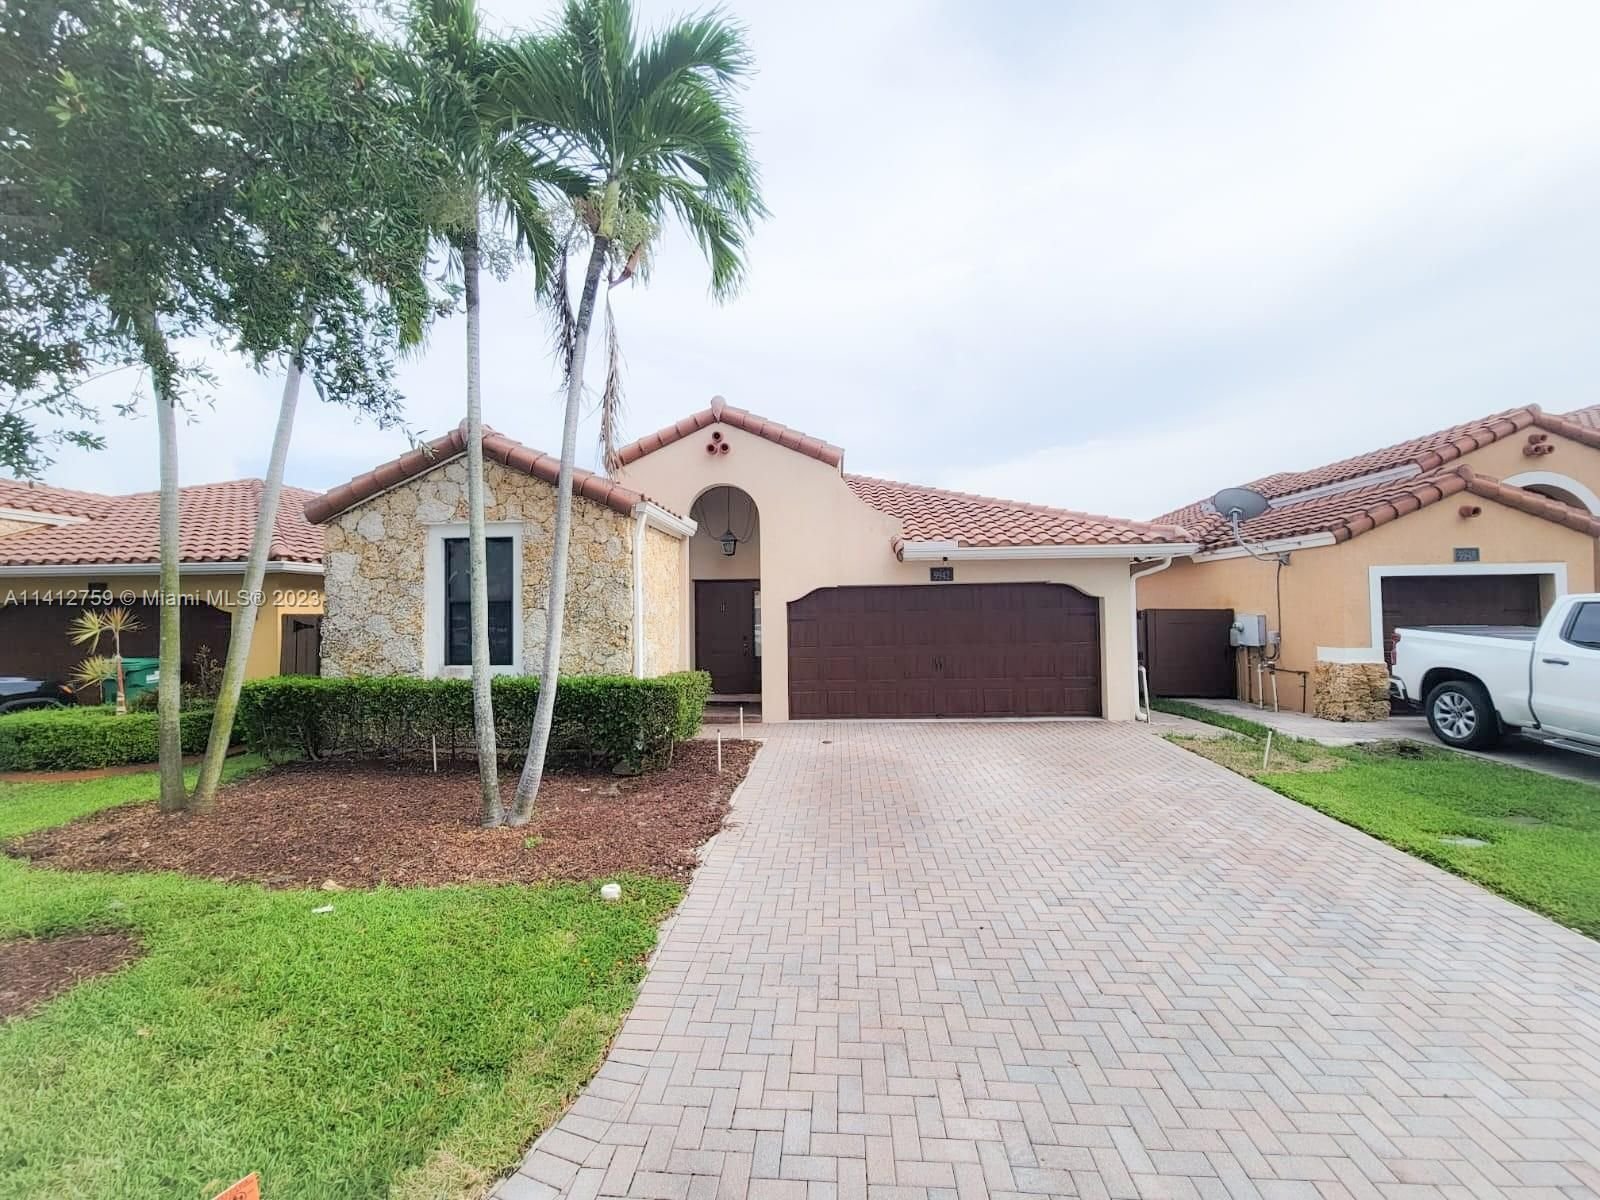 Real estate property located at 9942 10th Ter, Miami-Dade County, Miami, FL